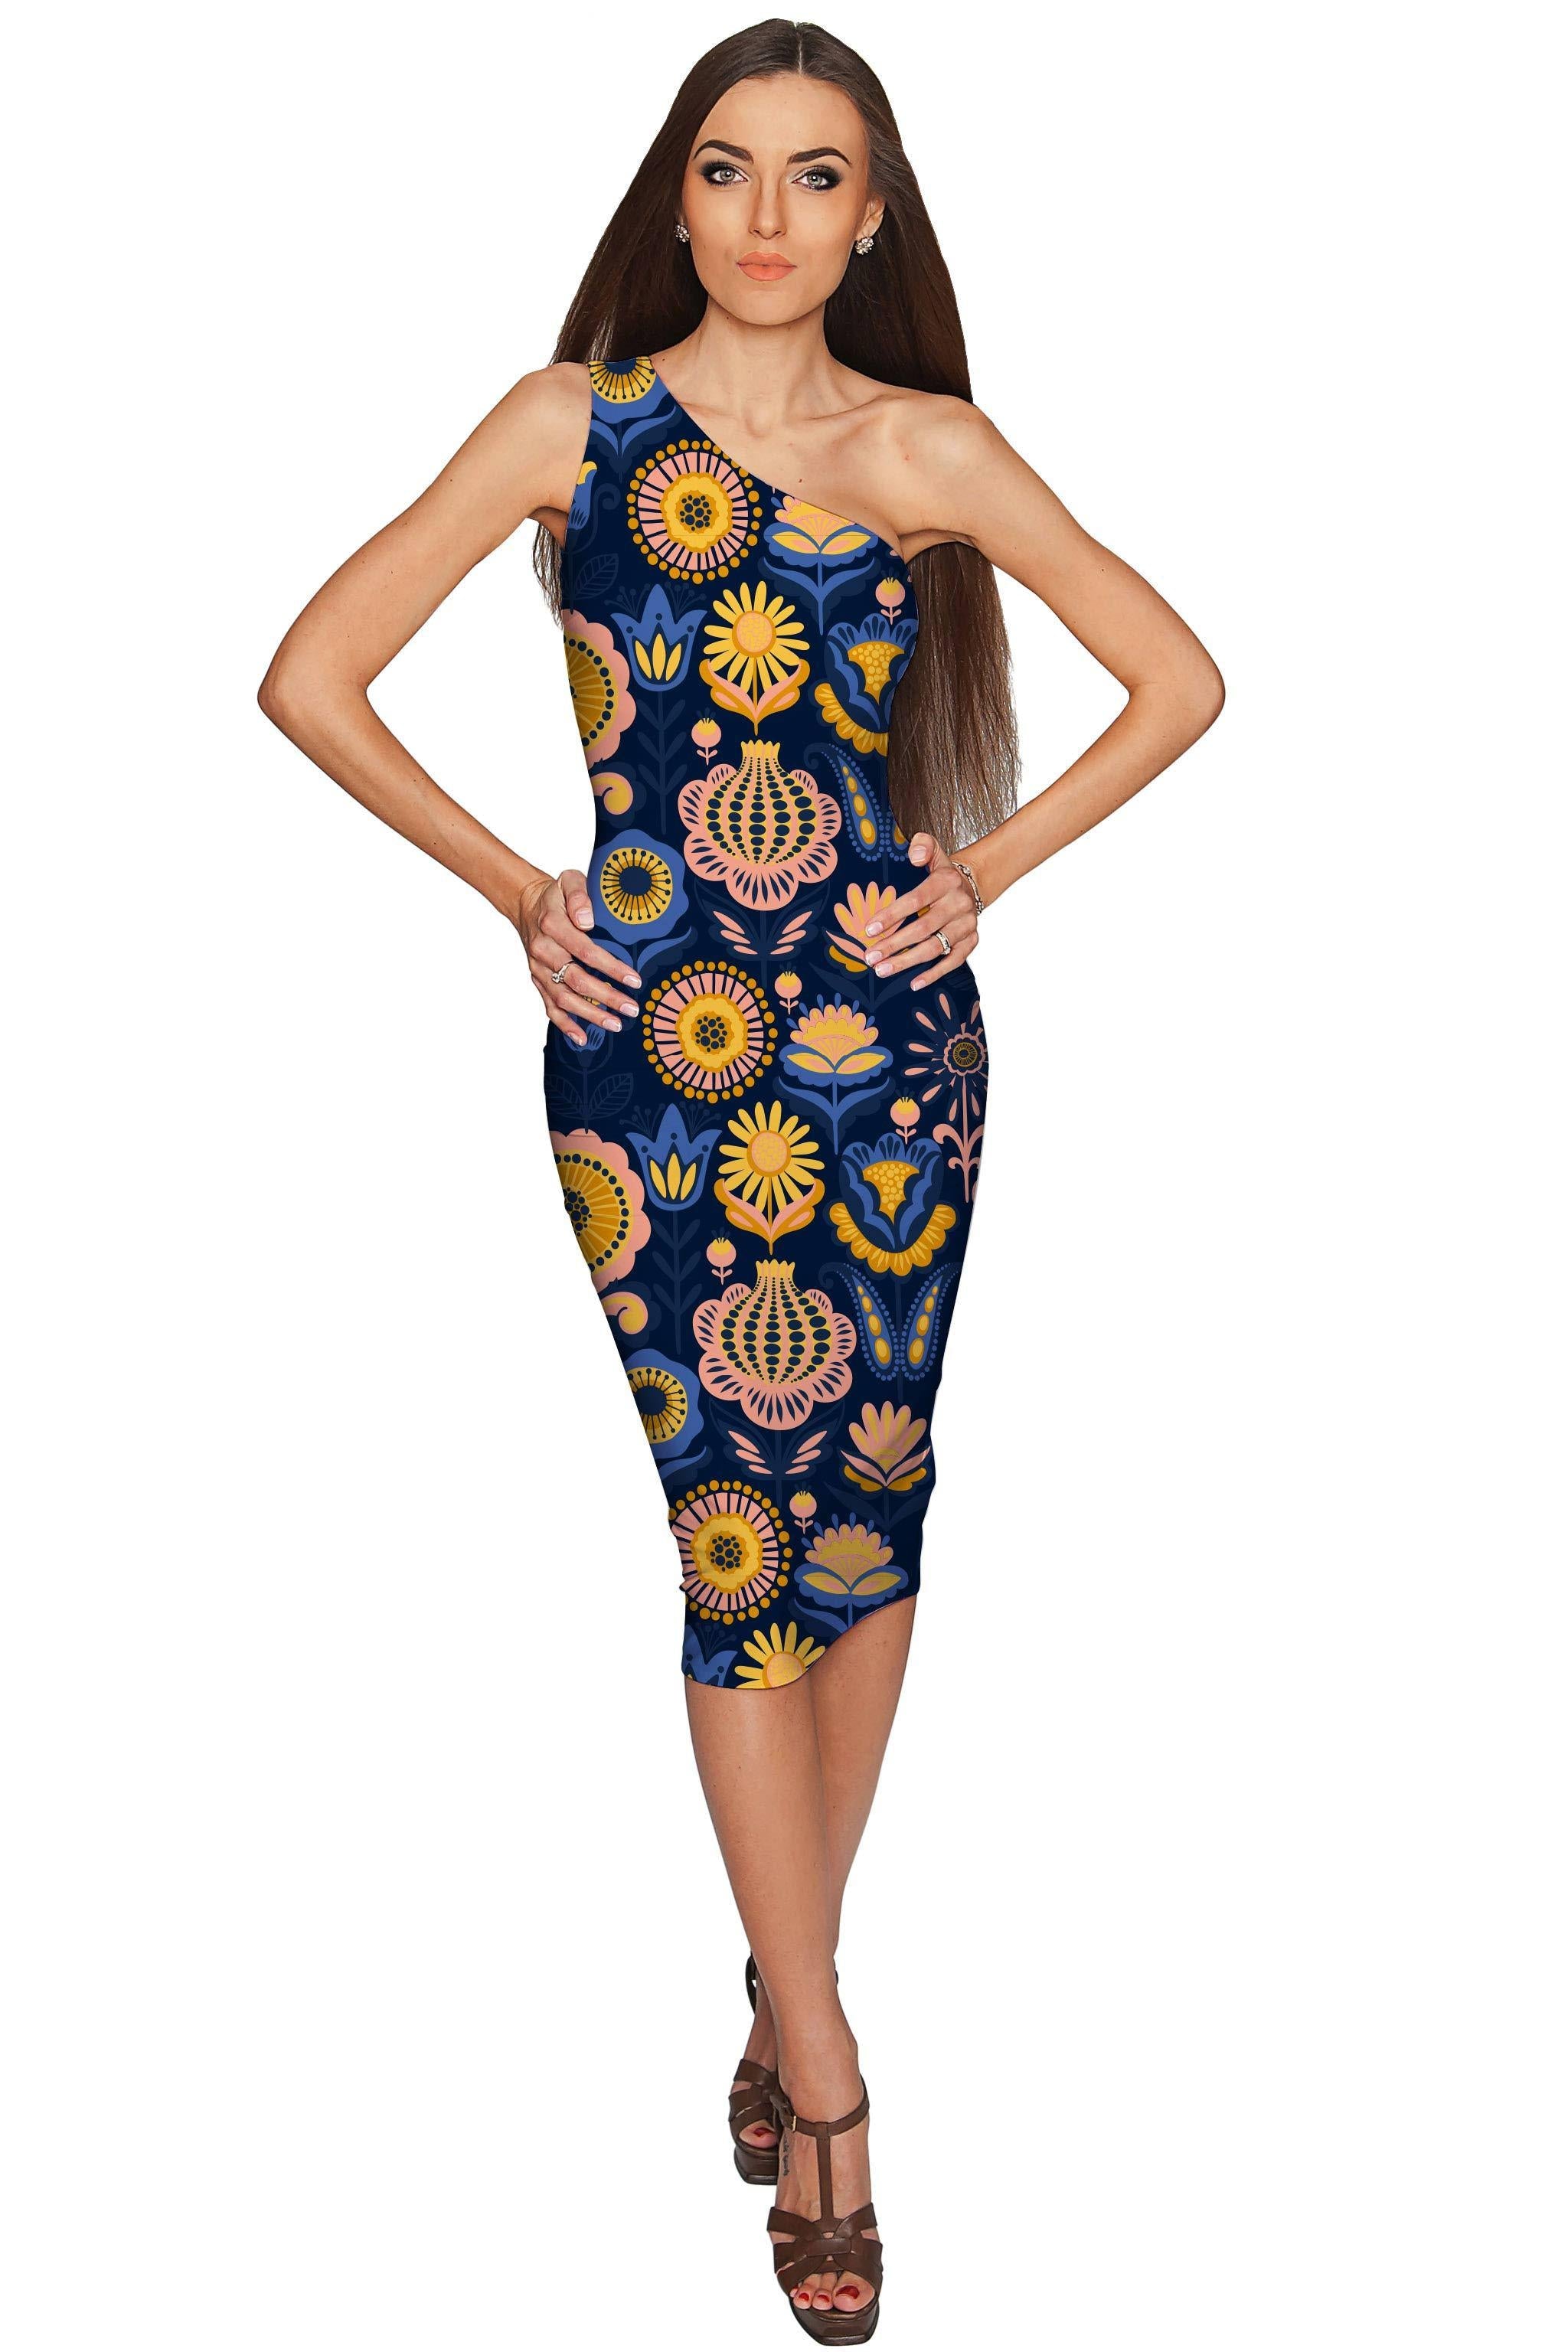 Bella Luna Layla Blue Floral One-Shoulder Bodycon Midi Dress - Women - Pineapple Clothing